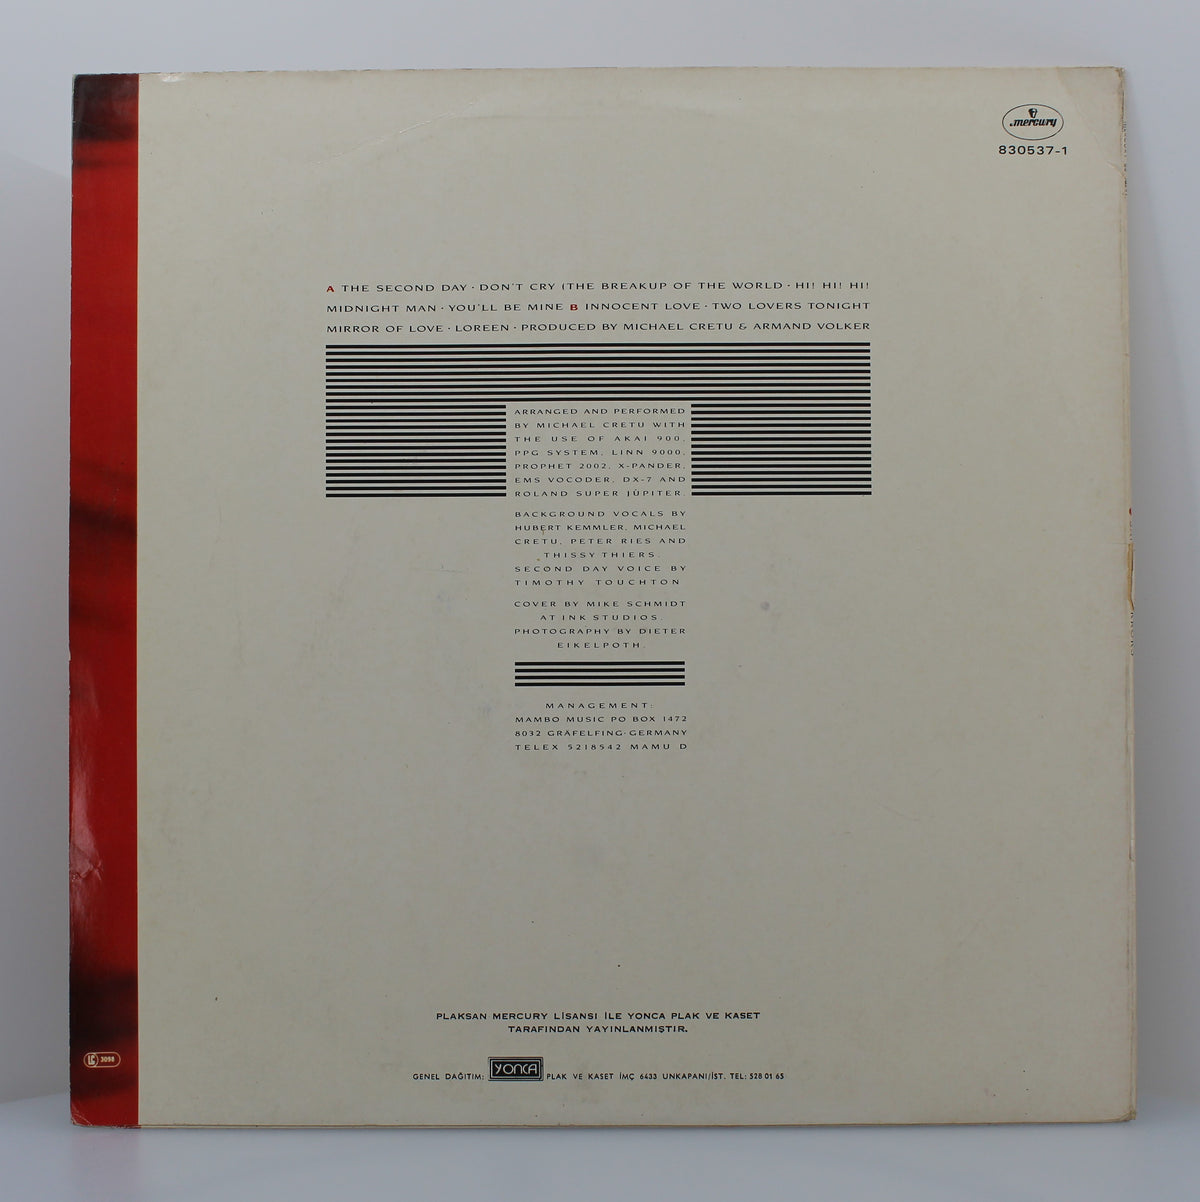 Sandra ‎– The Long Play, Vinyl, LP, Album, Turkey 1985